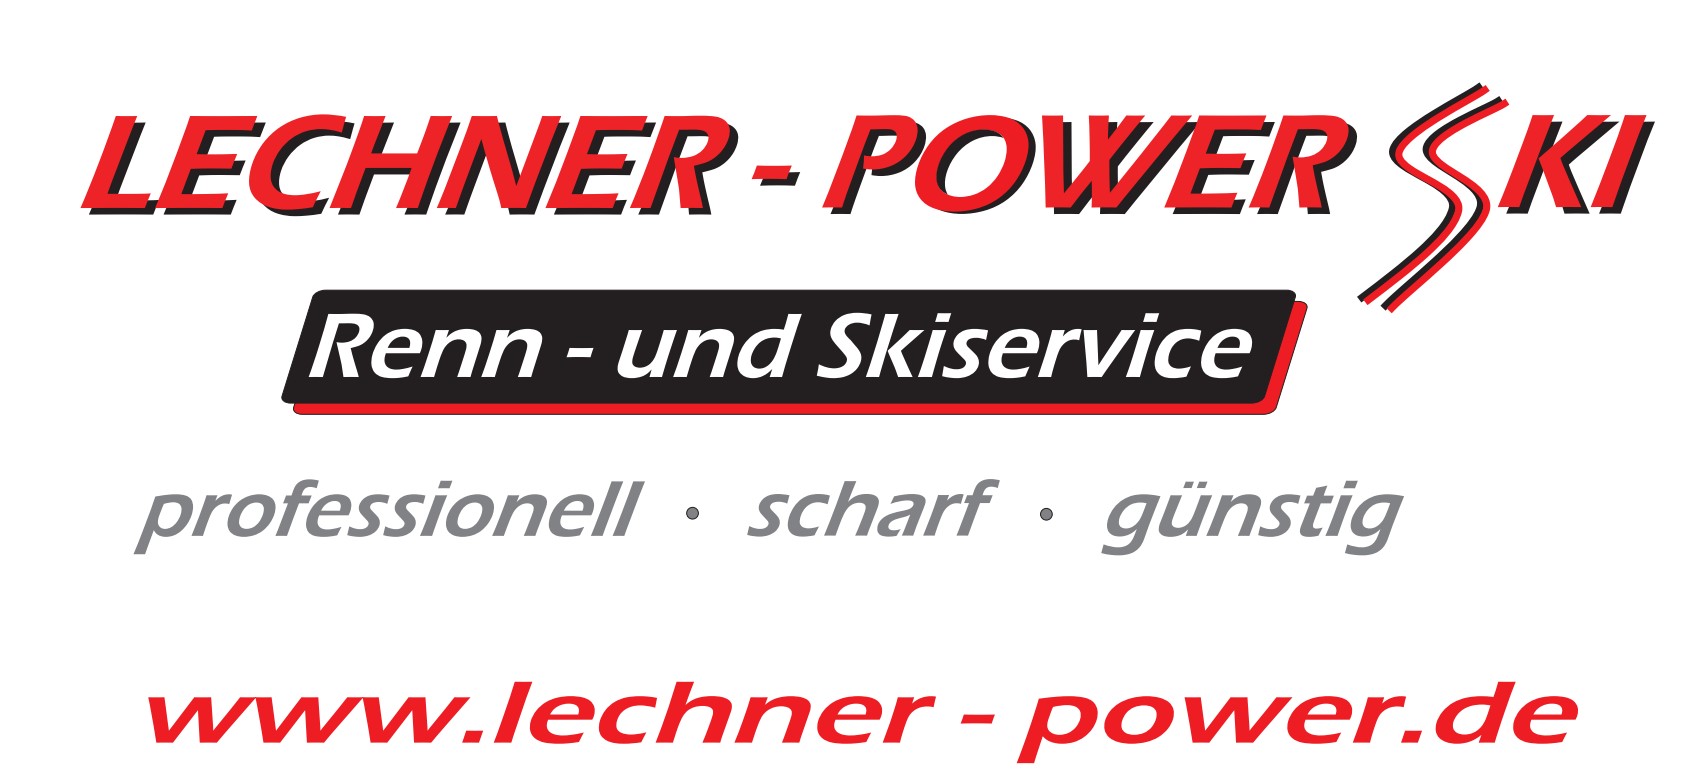 Lechner Power